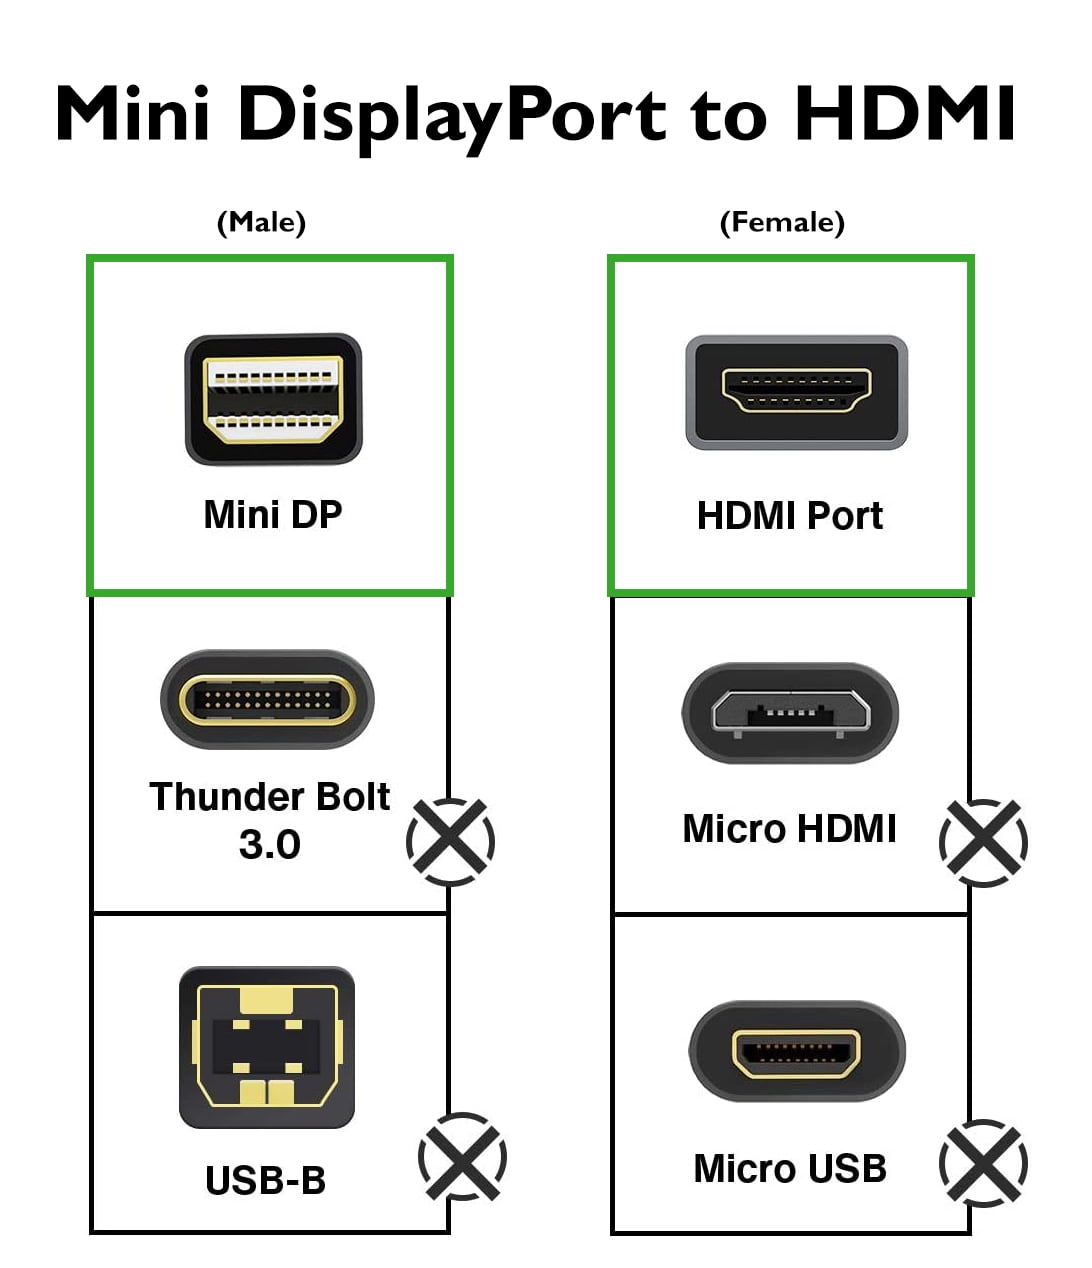 GE Mini DisplayPort HDMI Adapter, White, 33589 - Walmart.com